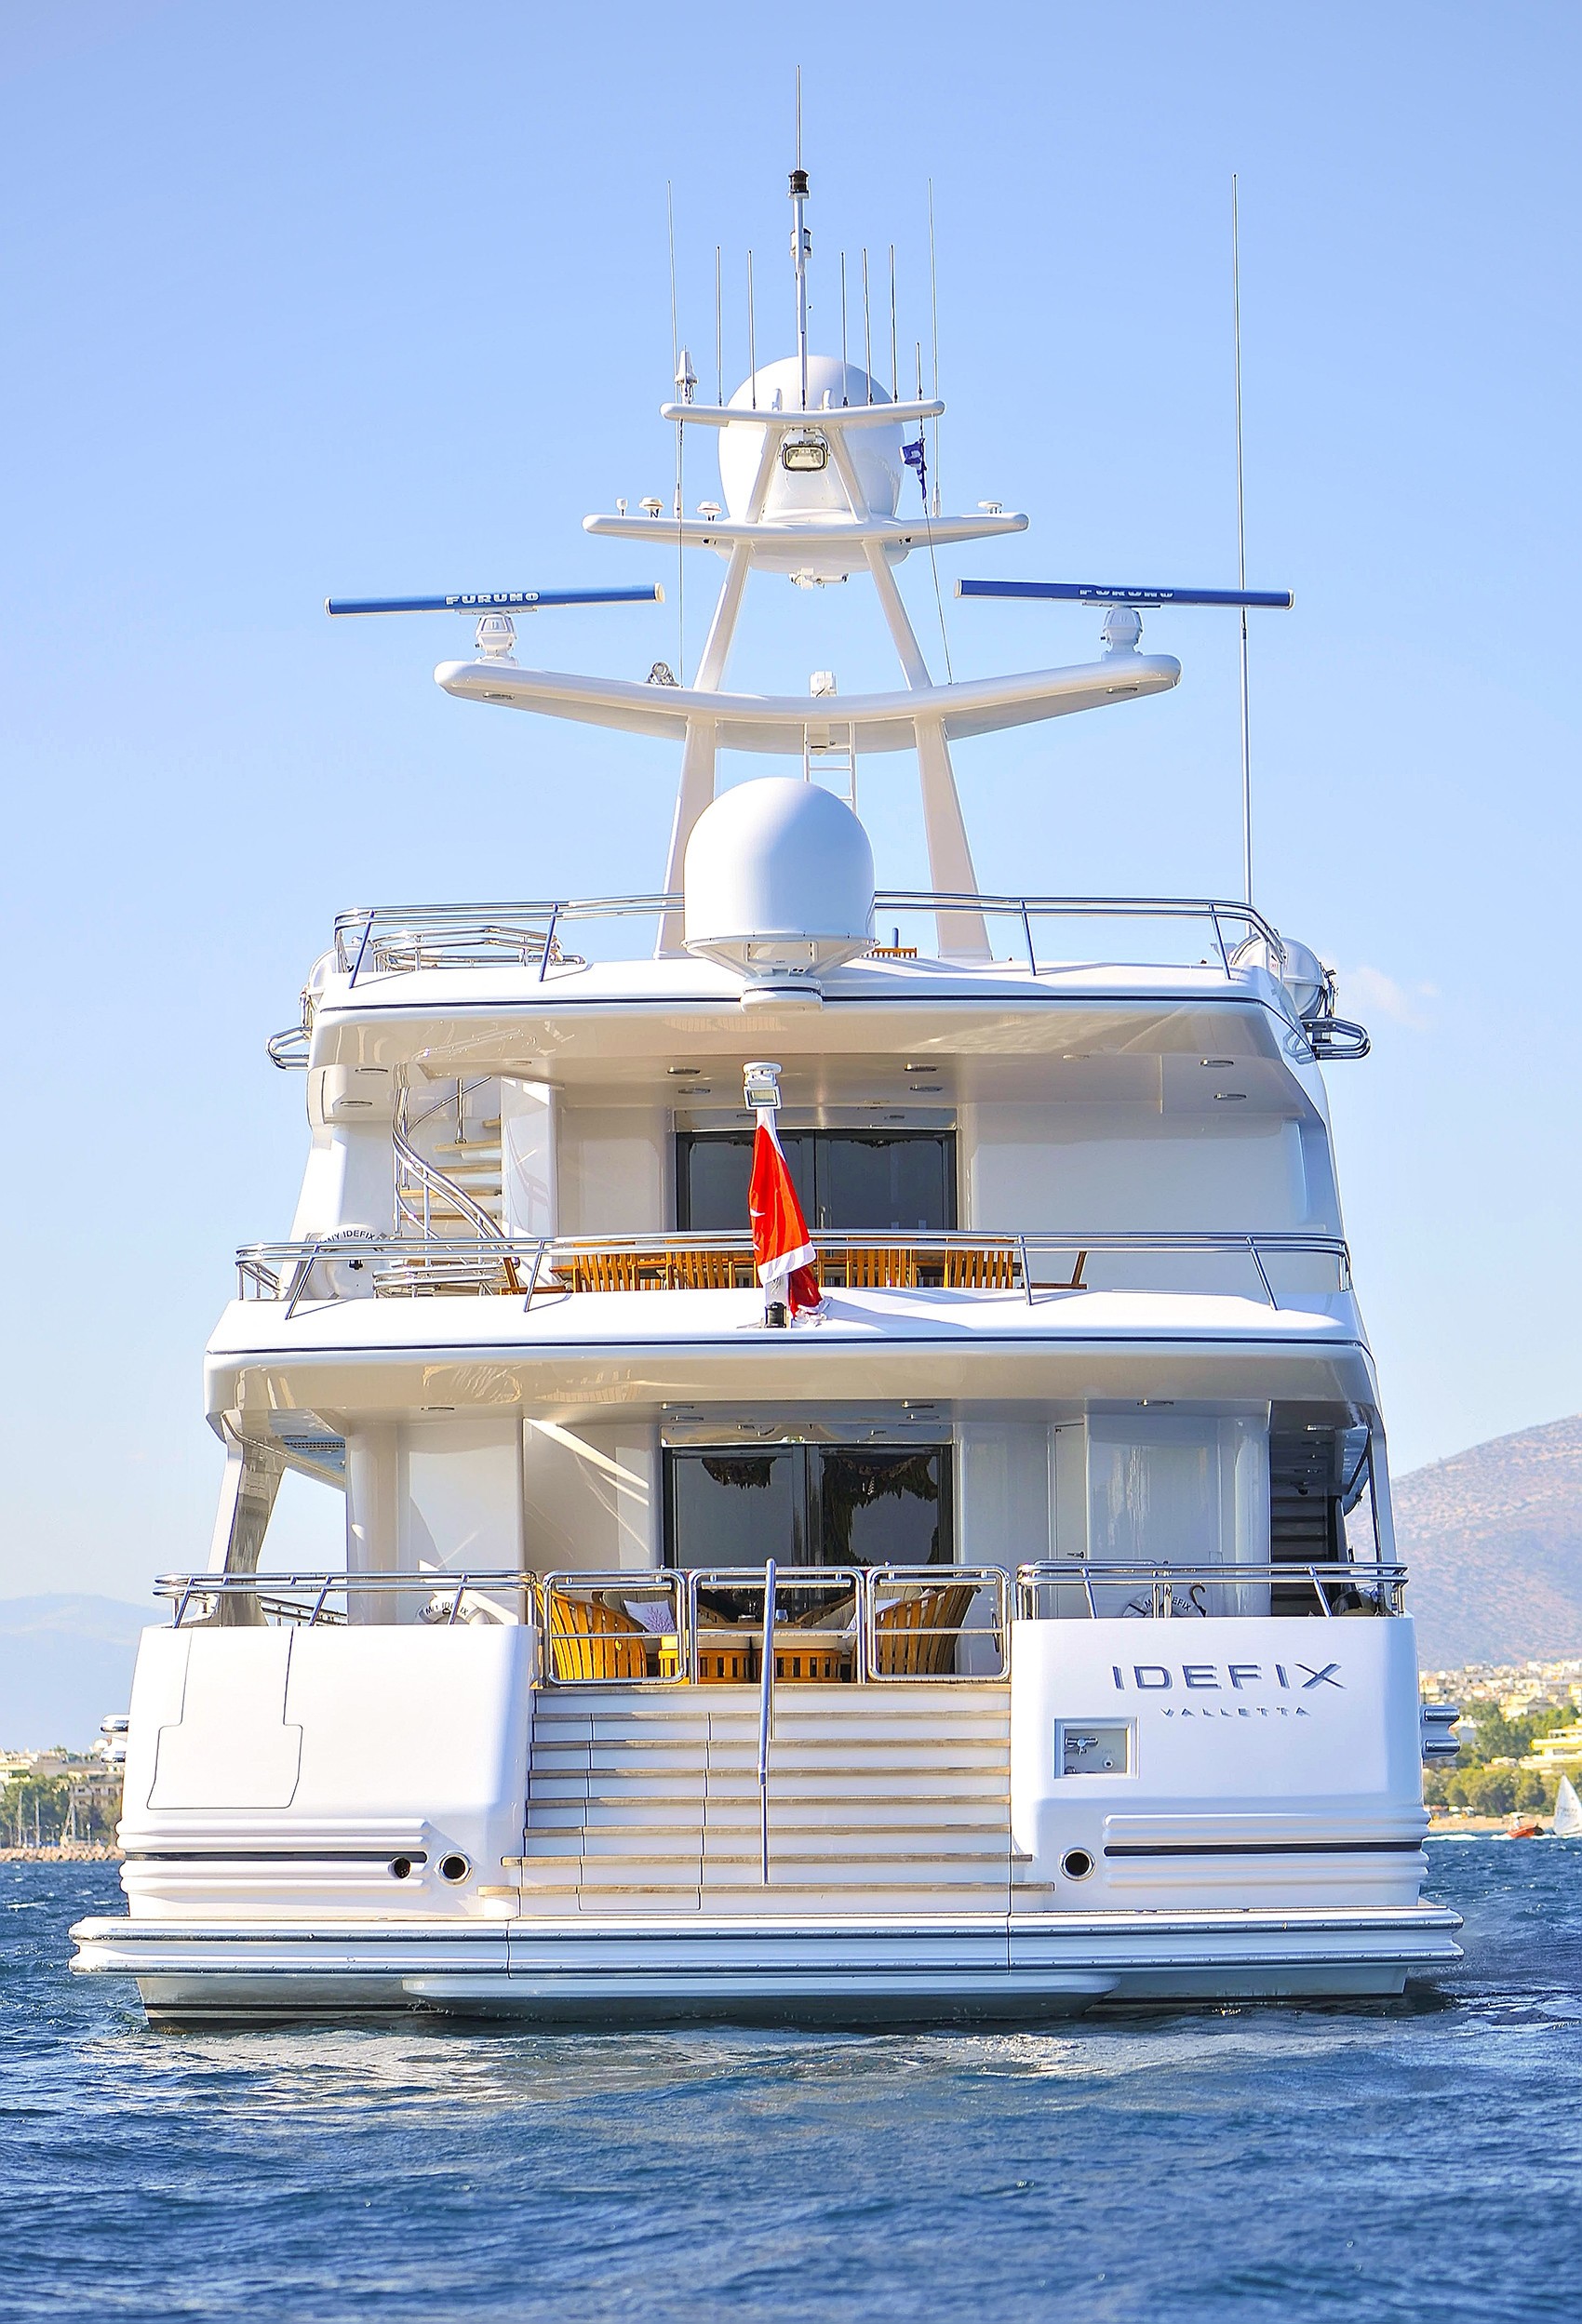 The 42m Yacht IDEFIX